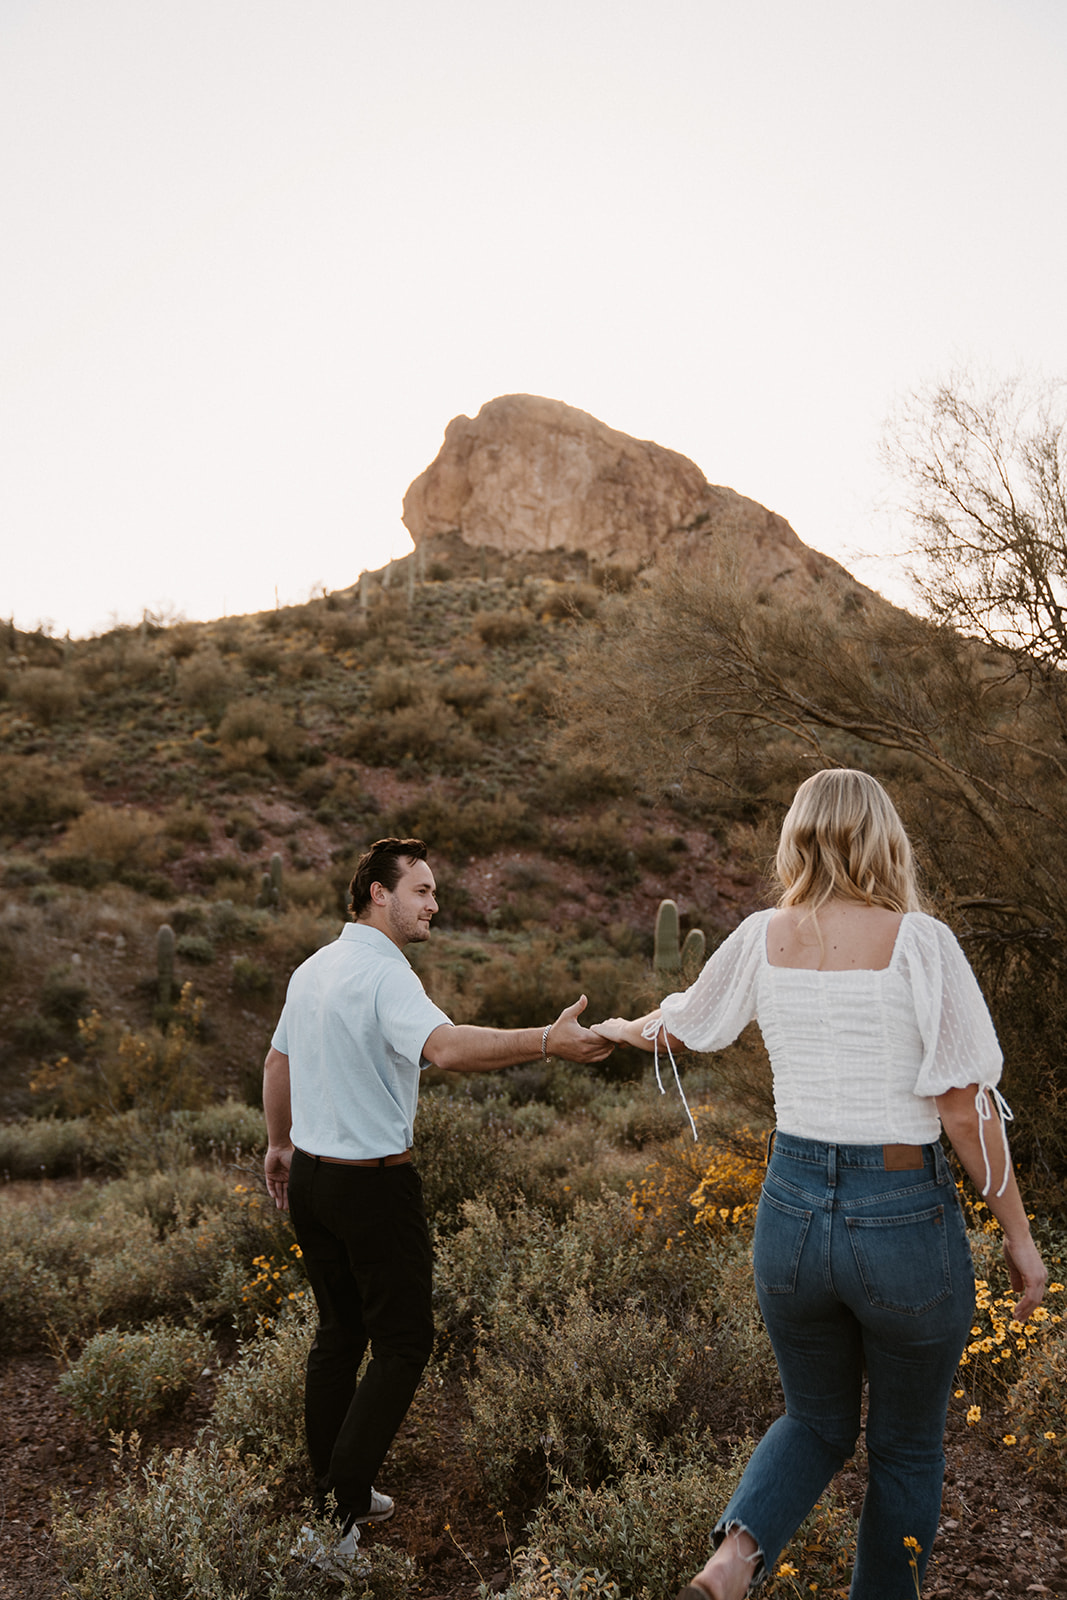 Arizona Desert Scenery for couples engagement photos